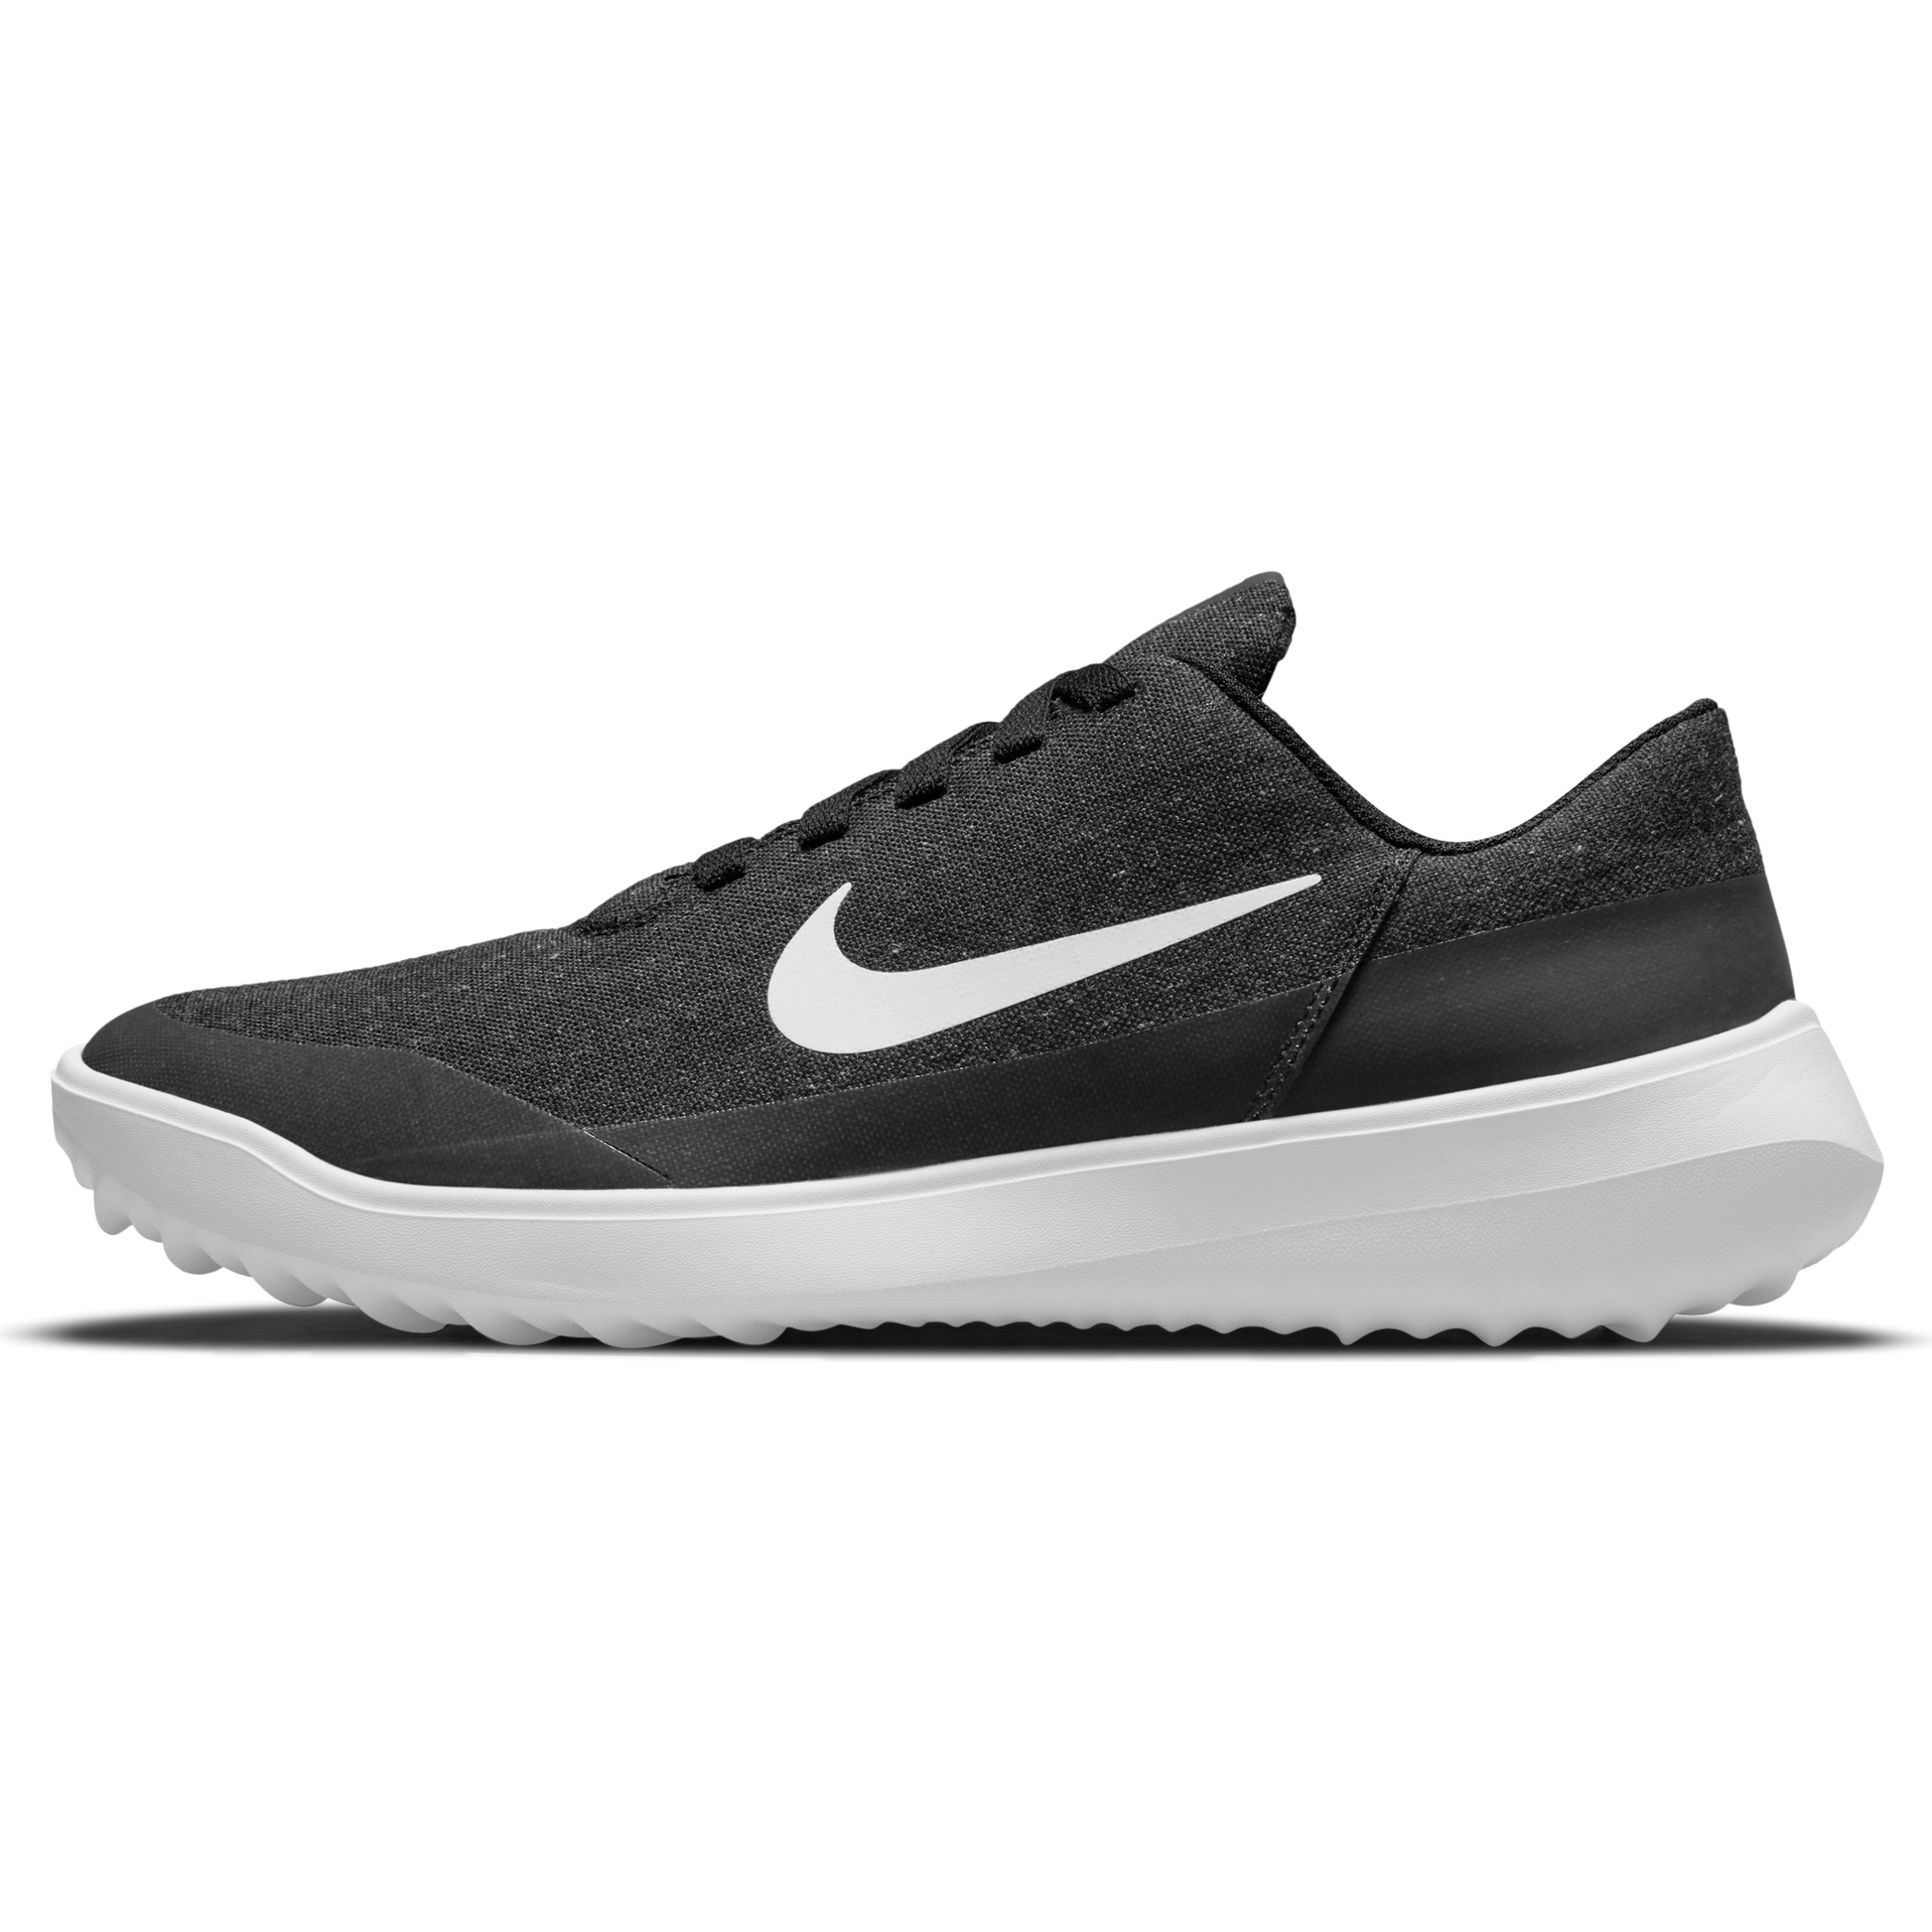 Nike Victory G Lite (Black/White) - Desirable Golf